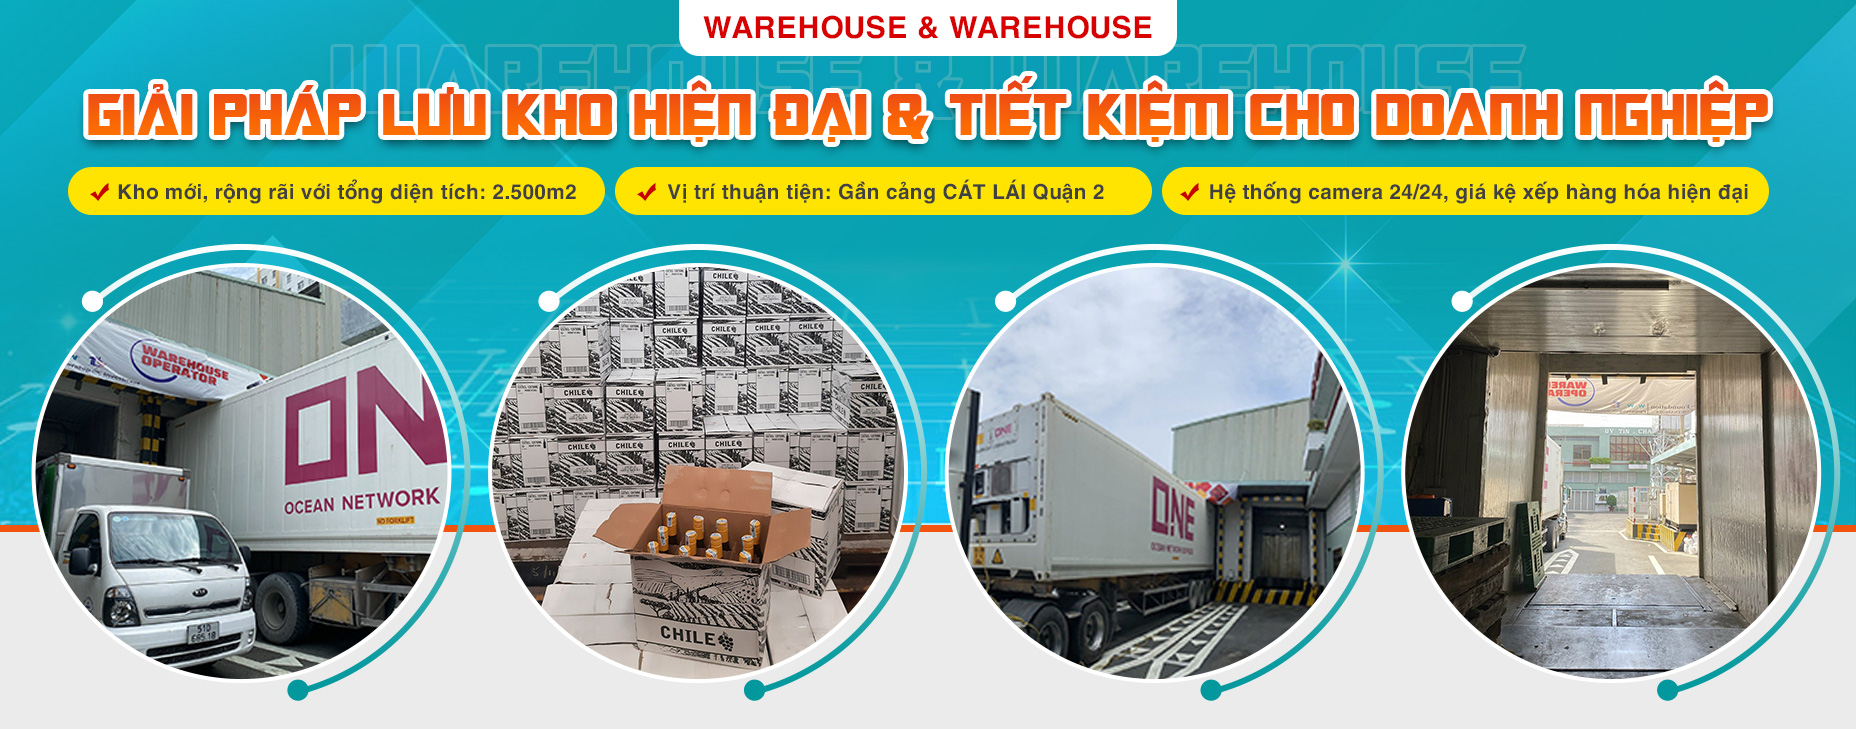 Công Ty TNHH Warehouse & Warehouse